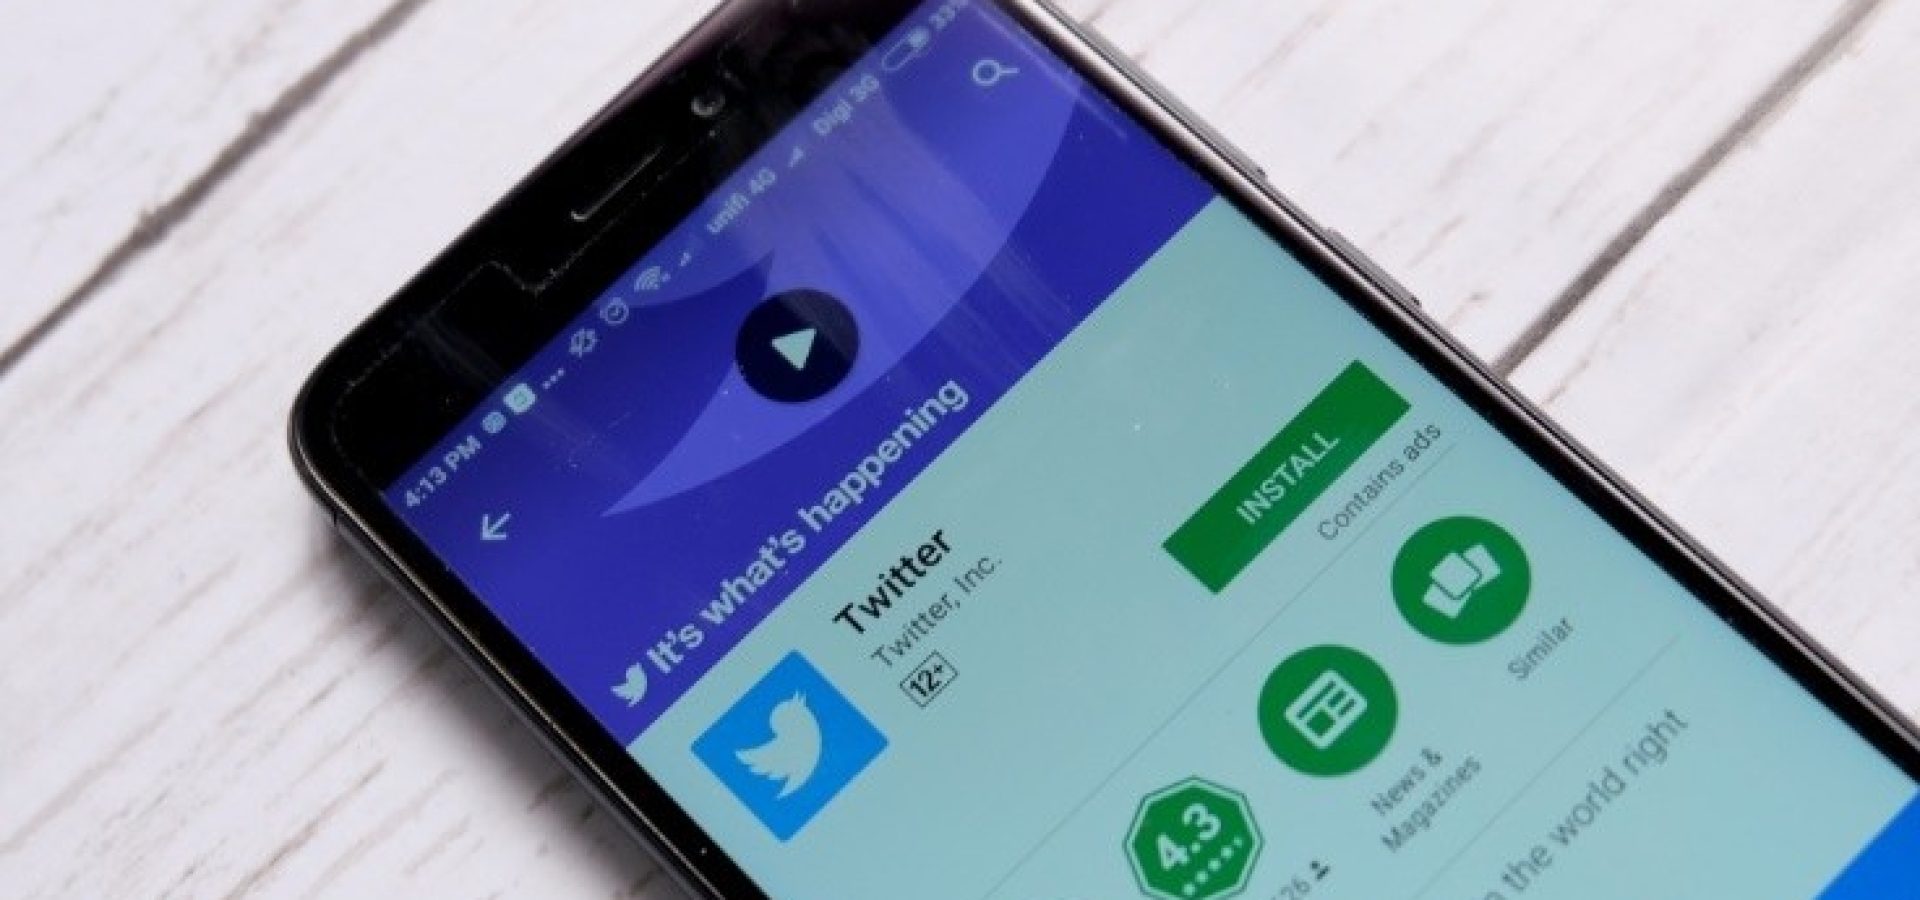 wibest broker - Twitter app as seen on Google PlayStore